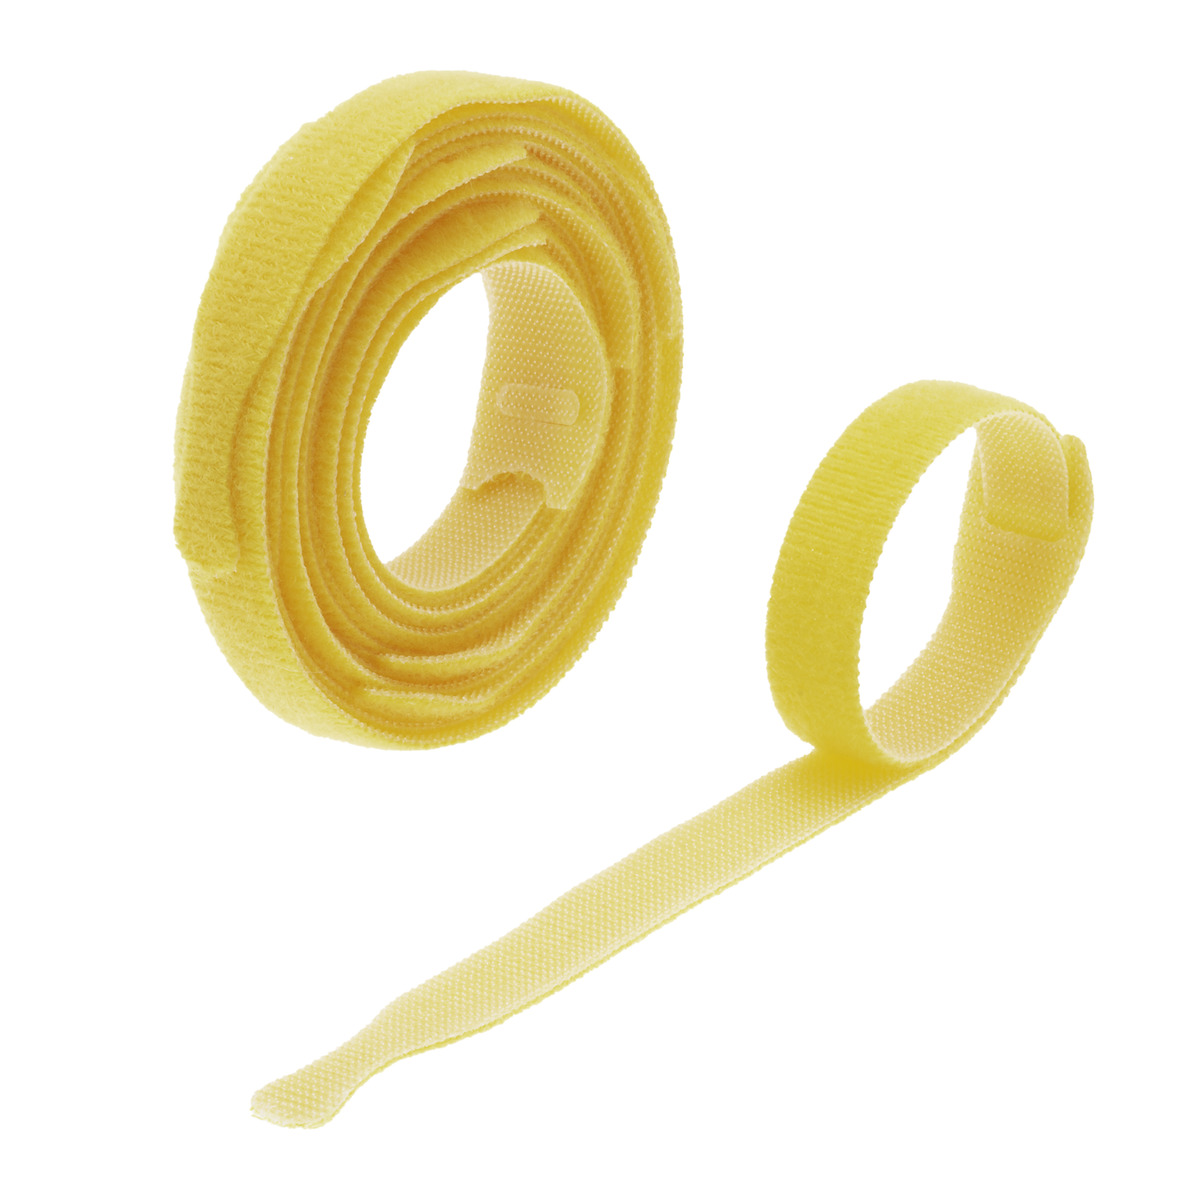 Cable Tie hook and loop fastener Yellow 12″ 10 - NSI Industries